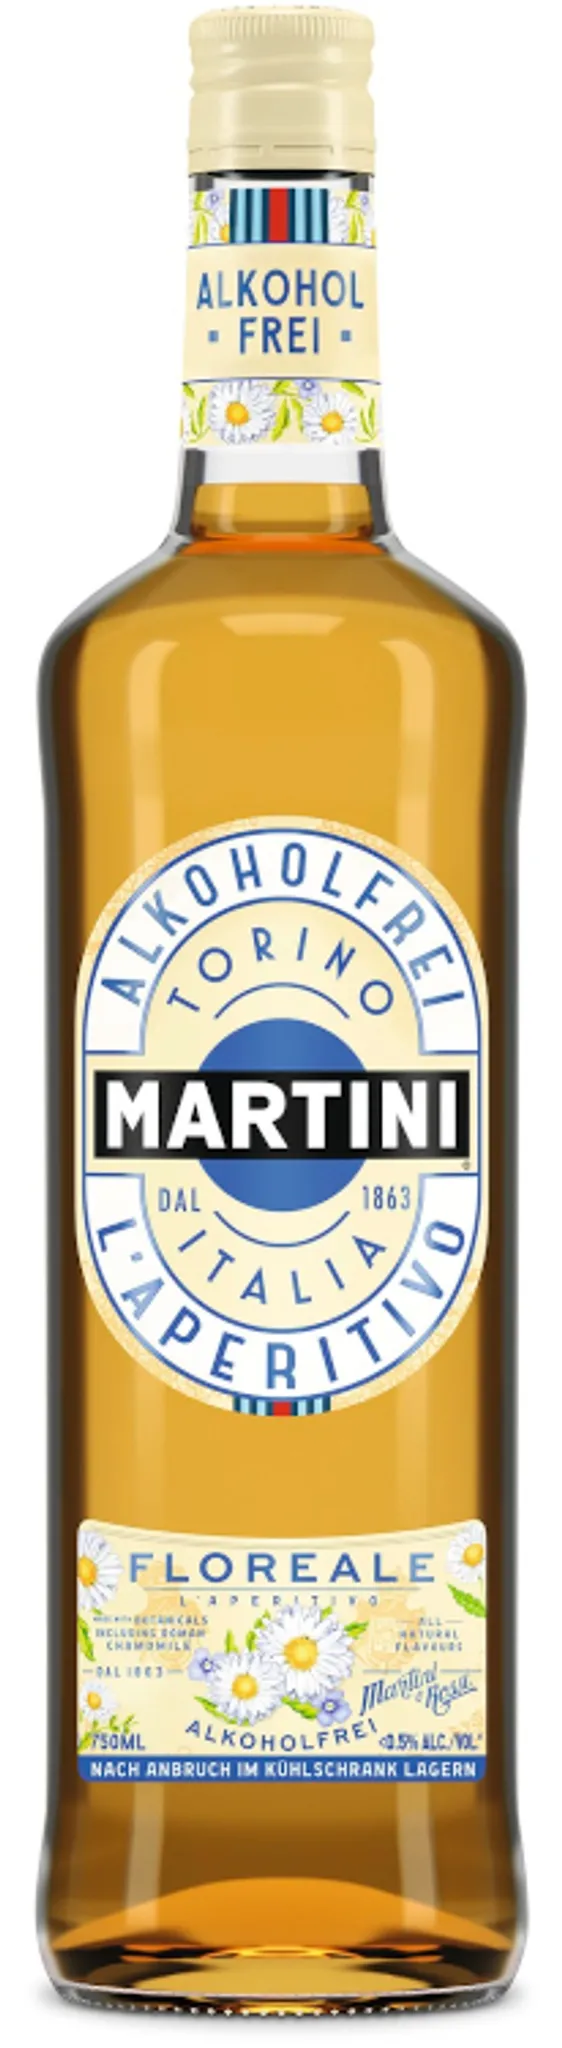 Martini Floreale alkoholfrei l'Aperitivo